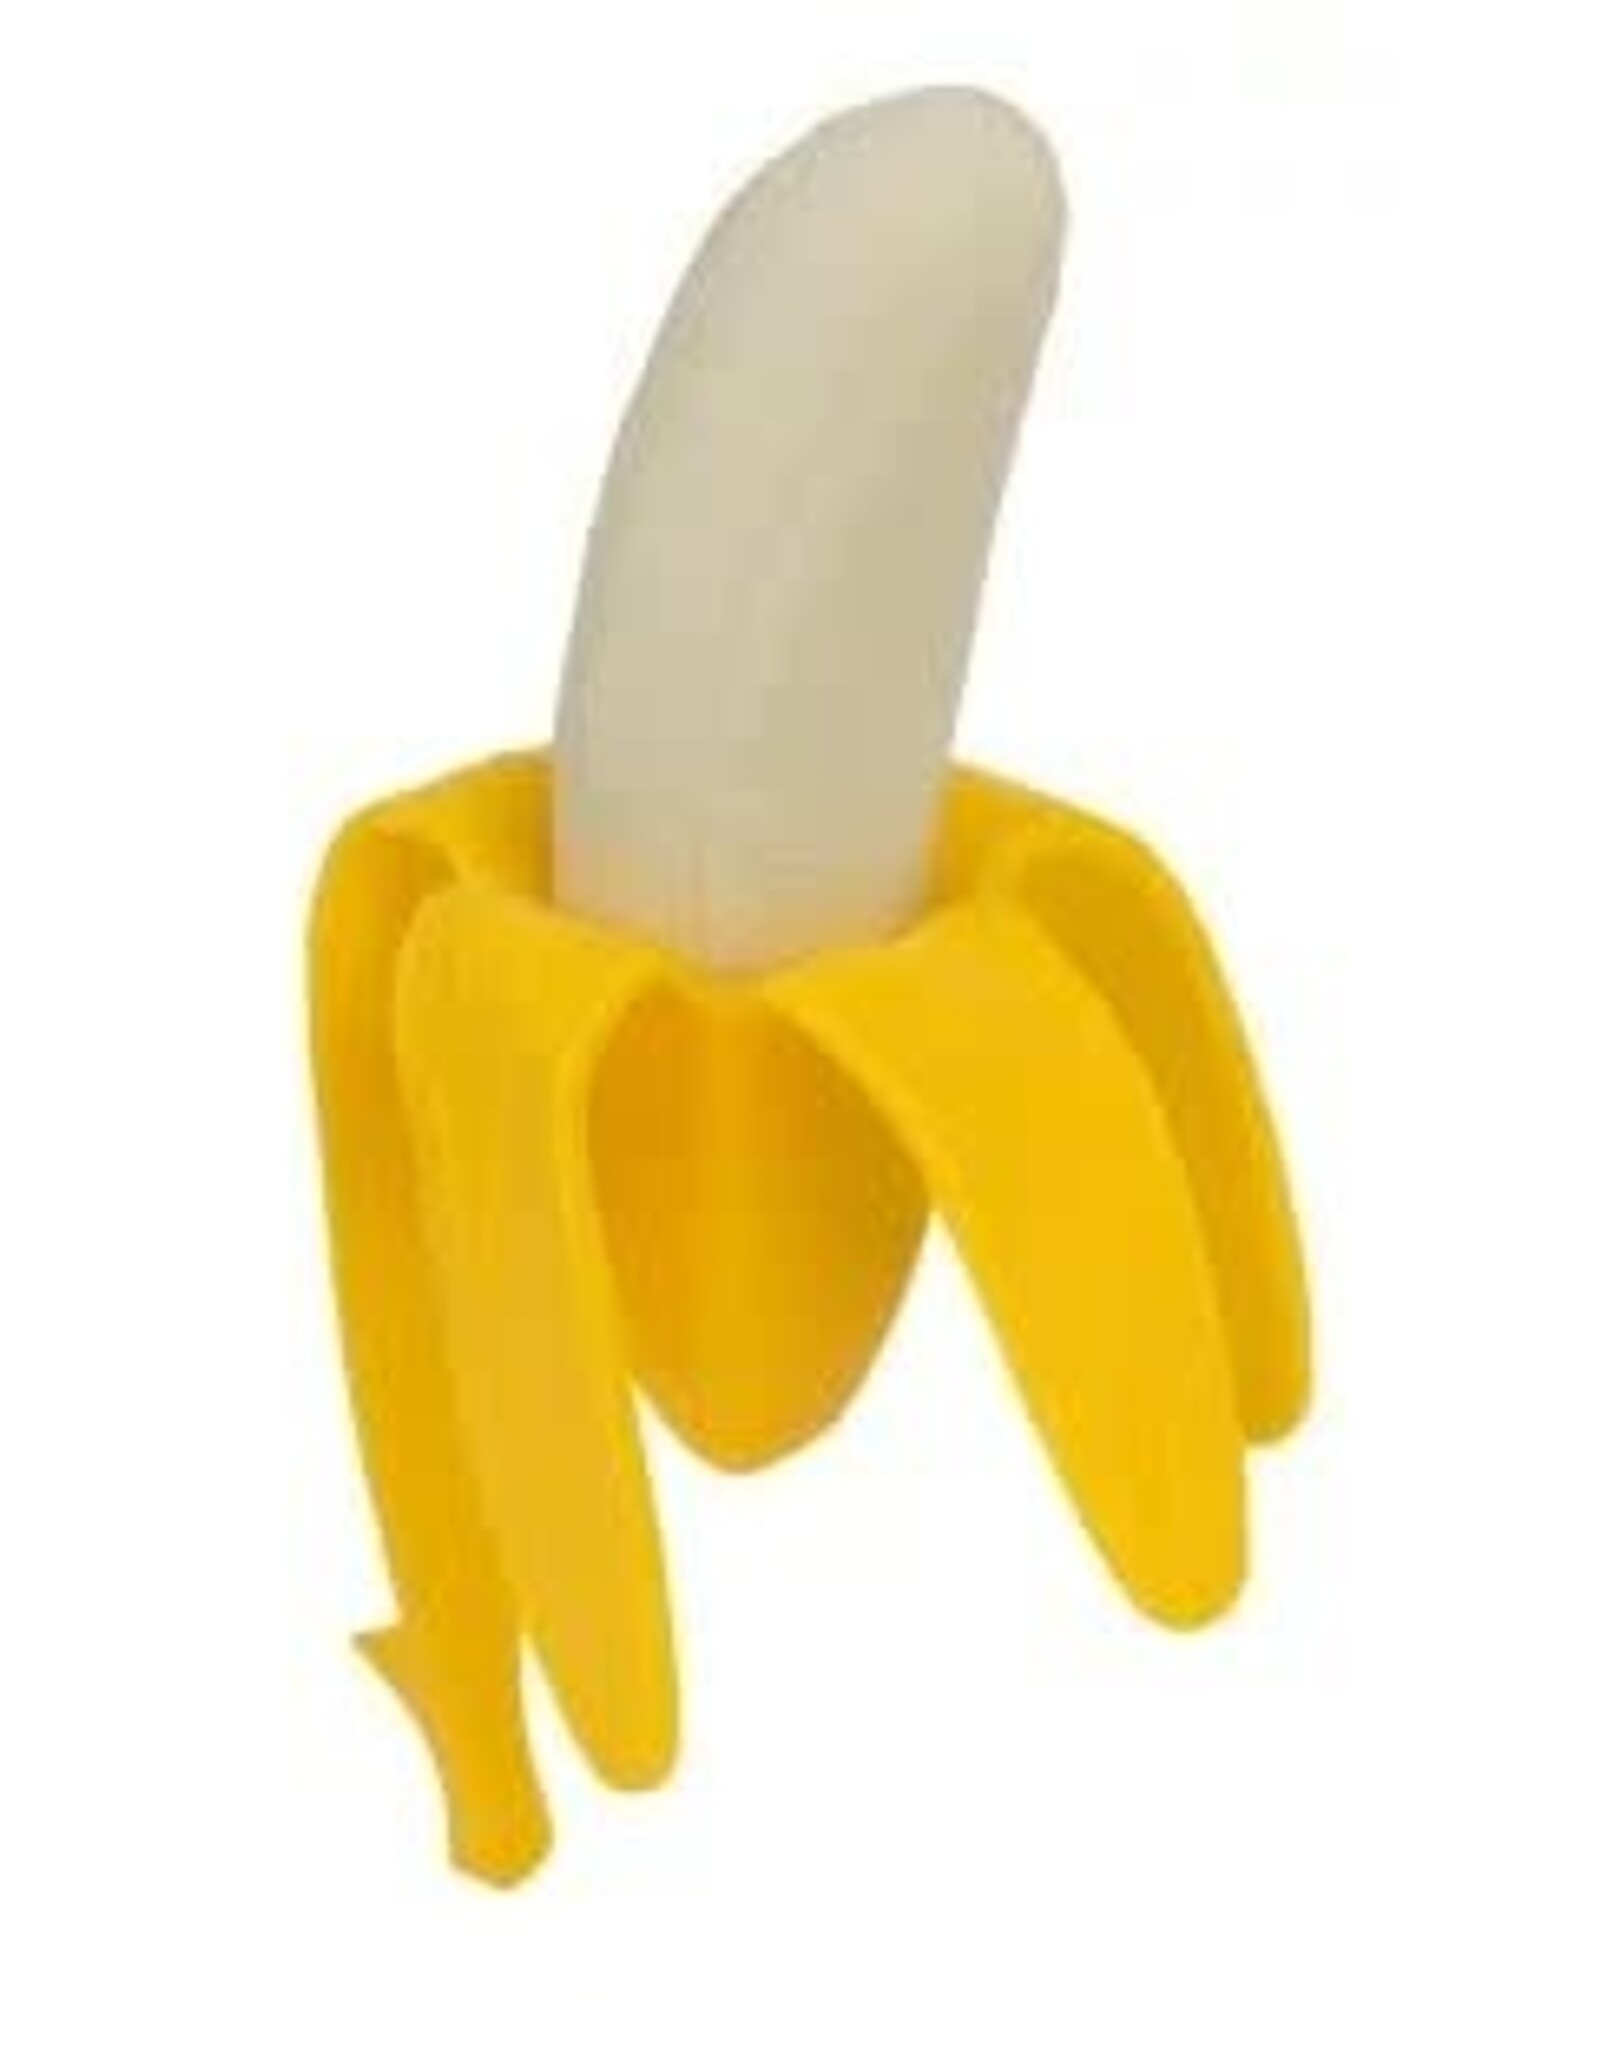 The Toy Network 6.25" Fake Banana